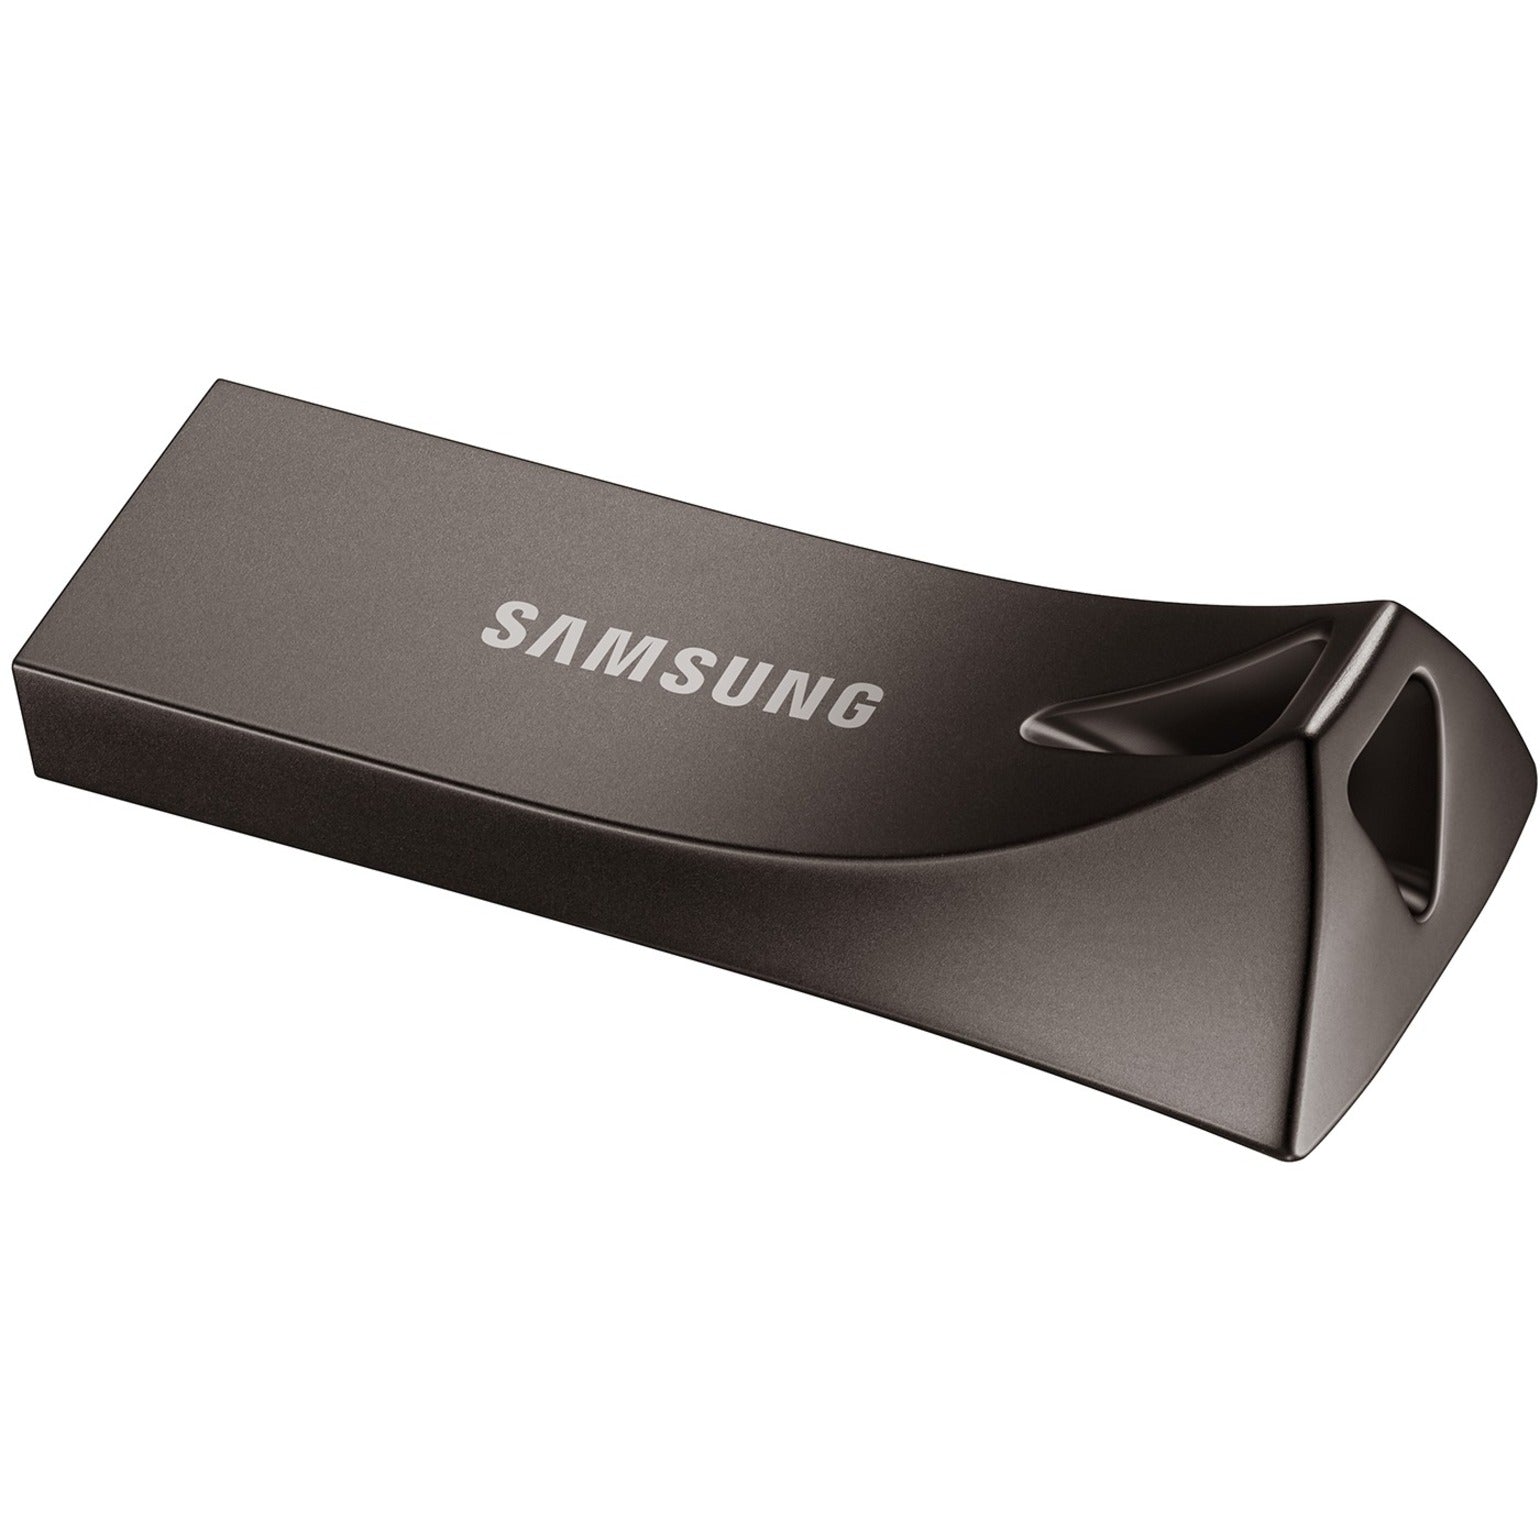 Samsung MUF-64BE4/AM BAR Plus USB 3.1 Flash Drive 64GB Titan Grey, High-Speed Data Transfer and Durable Design